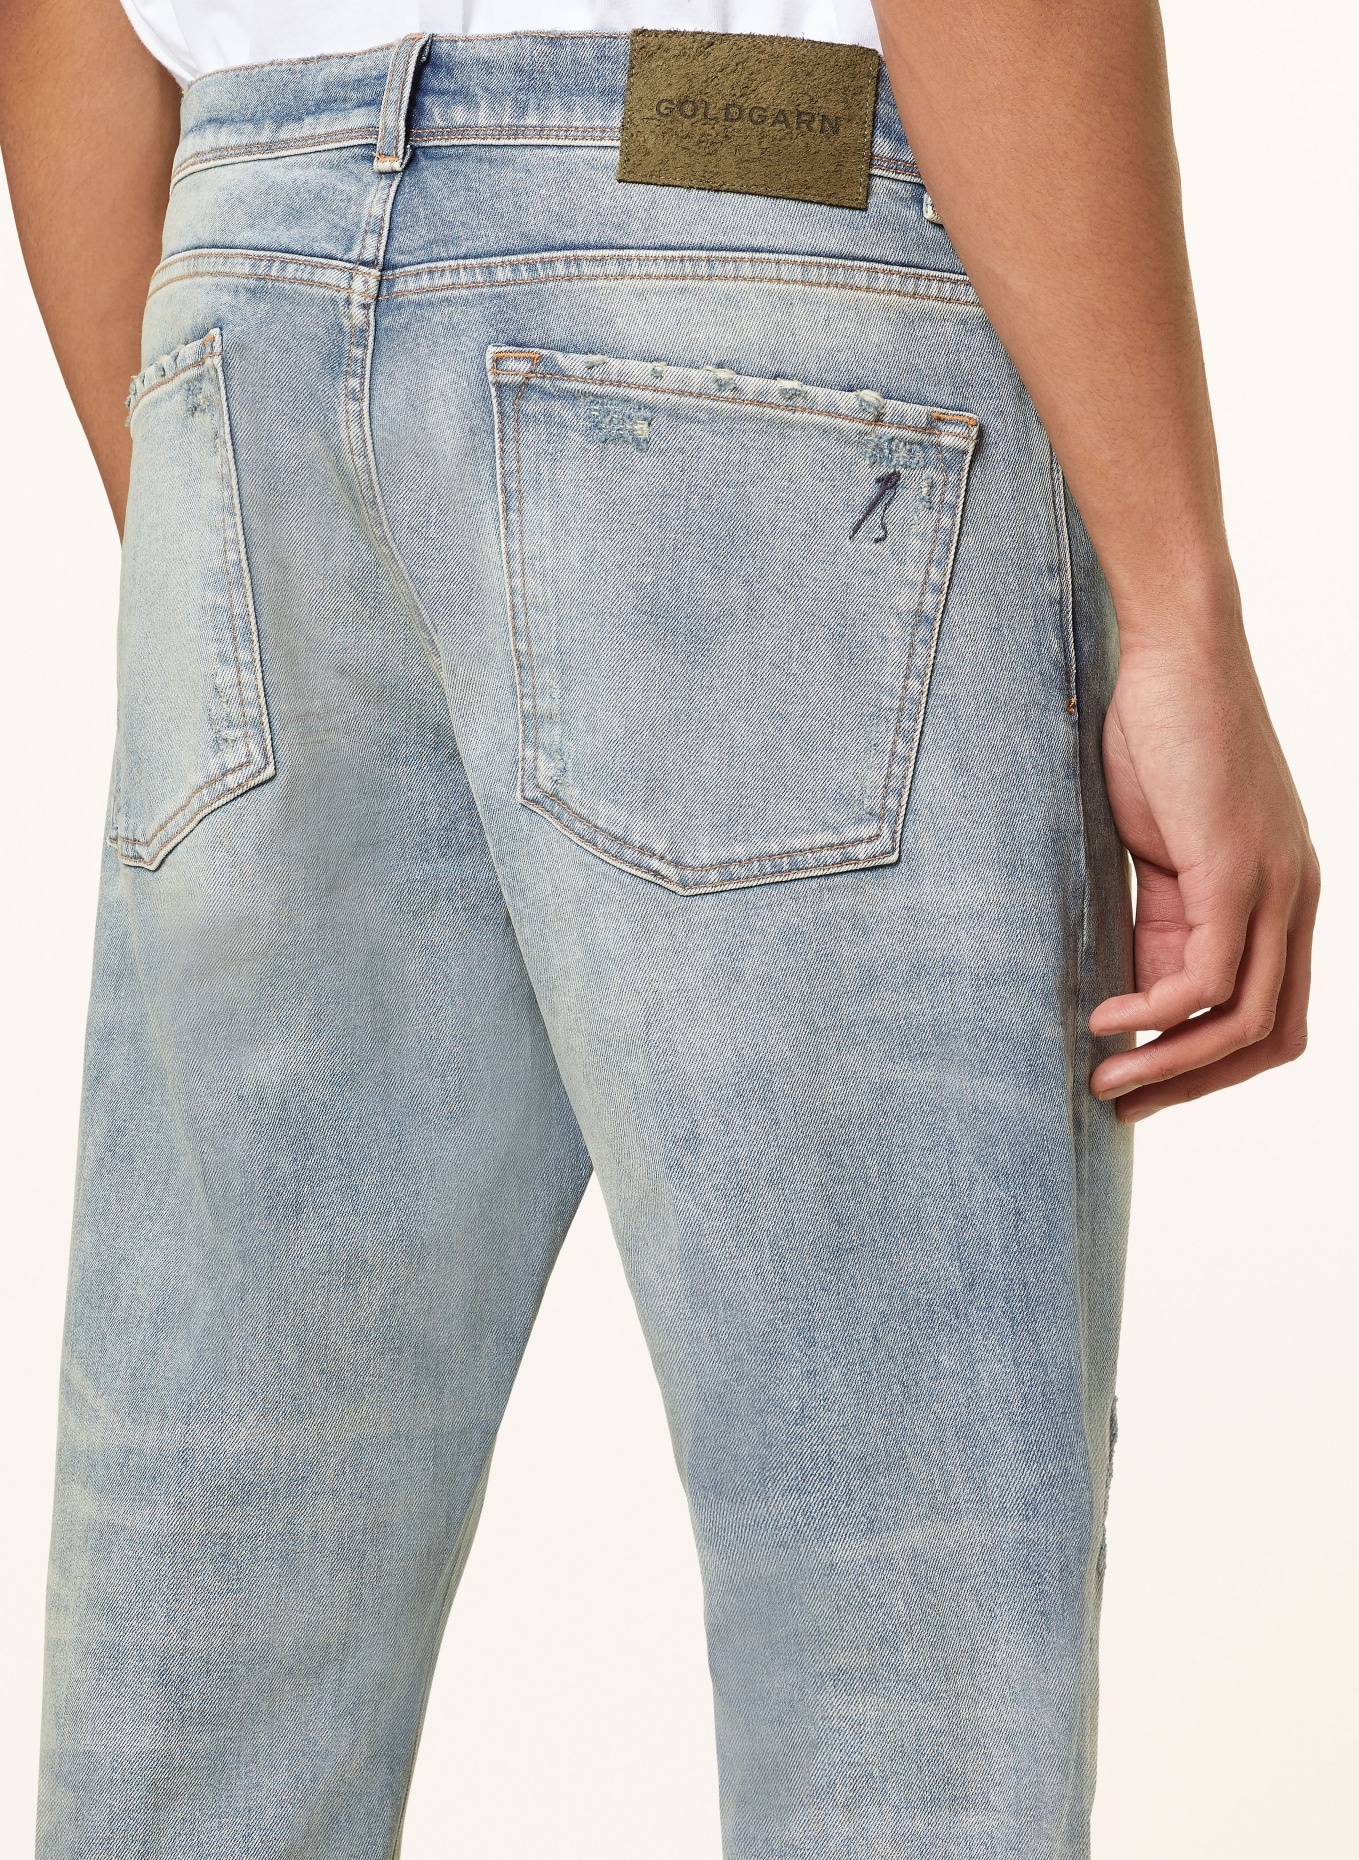 GOLDGARN DENIM Jeans RHEINAU Relaxed Cropped Fit, Farbe: 1010 Vintageblue (Bild 6)